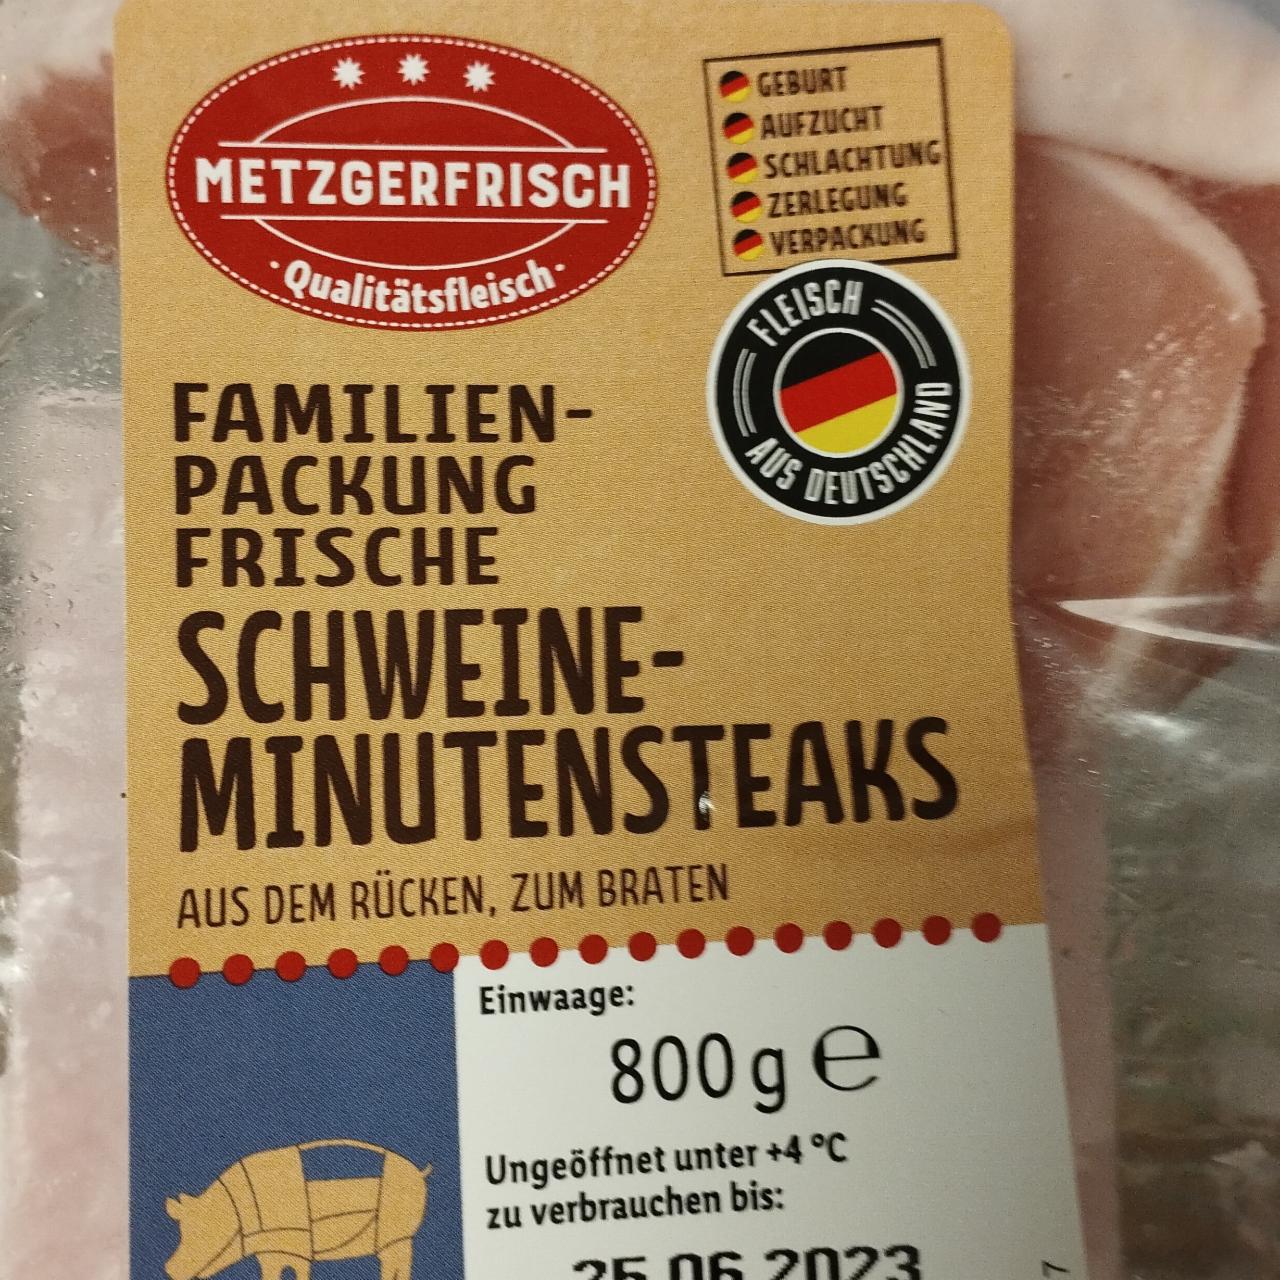 Familien-packung frische minutensteaks - калорійність, Metzgerfrisch харчова ⋙TablycjaKalorijnosti schweine цінність